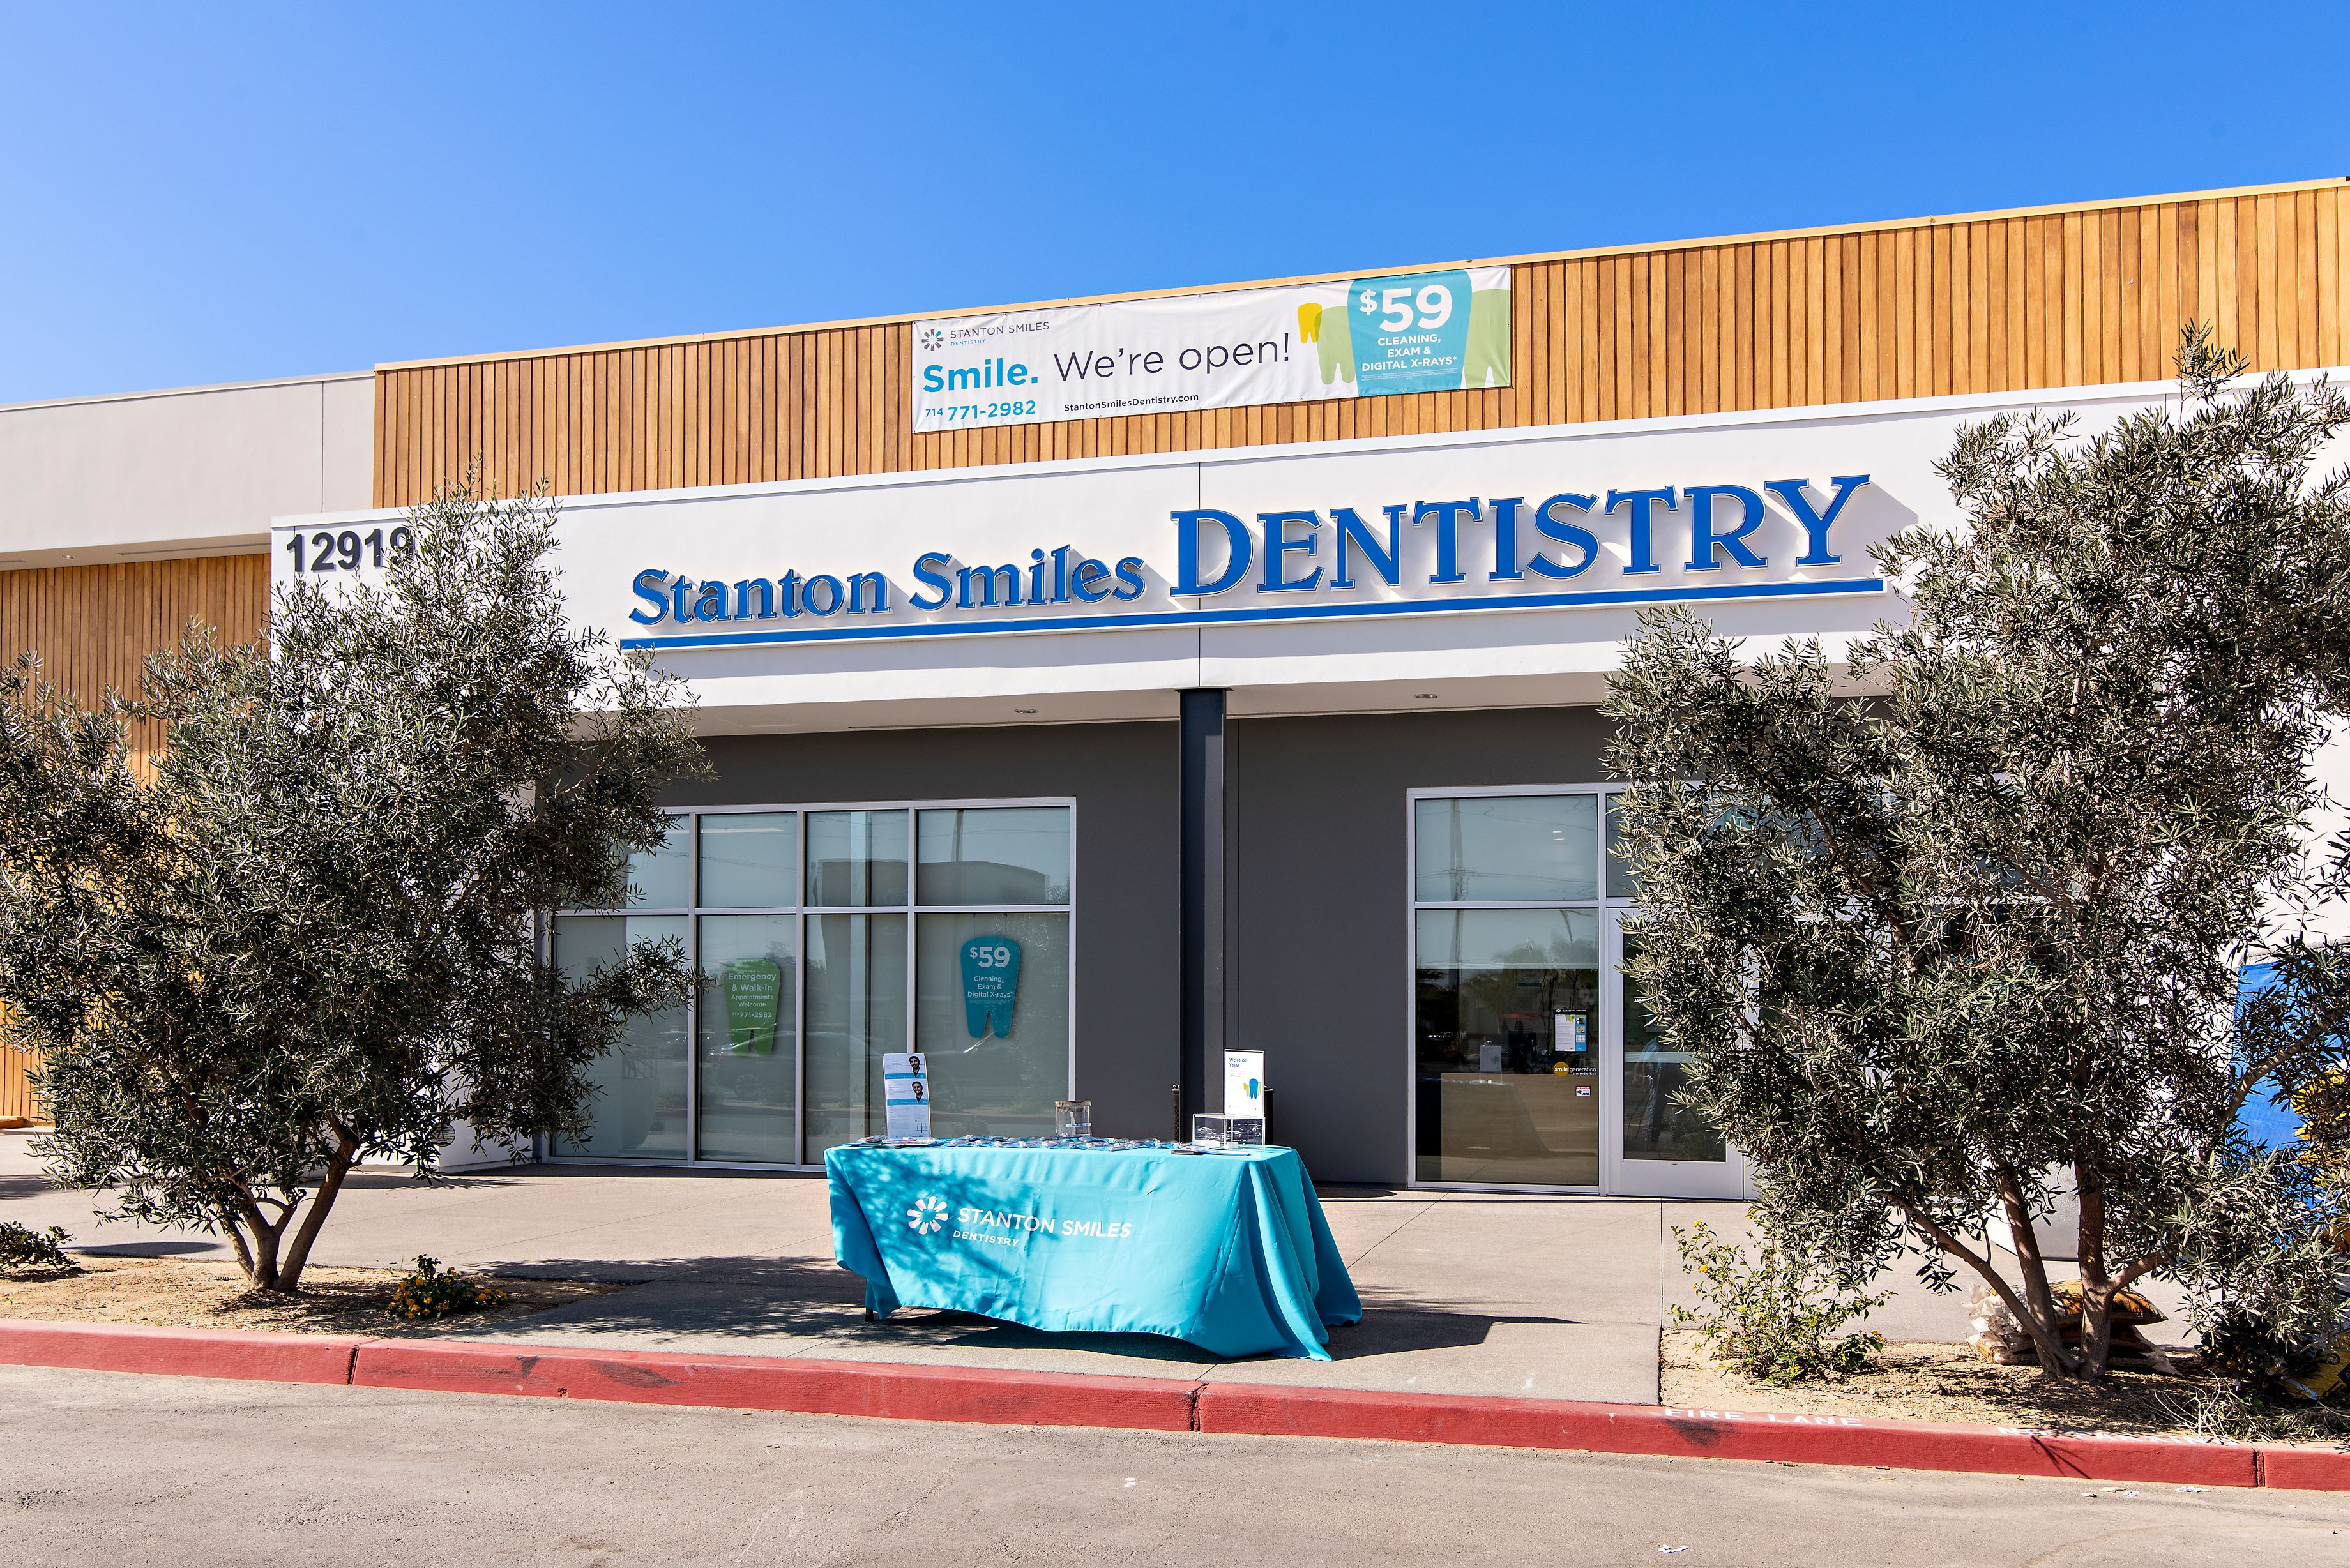 Stanton Smiles Dentistry Photo